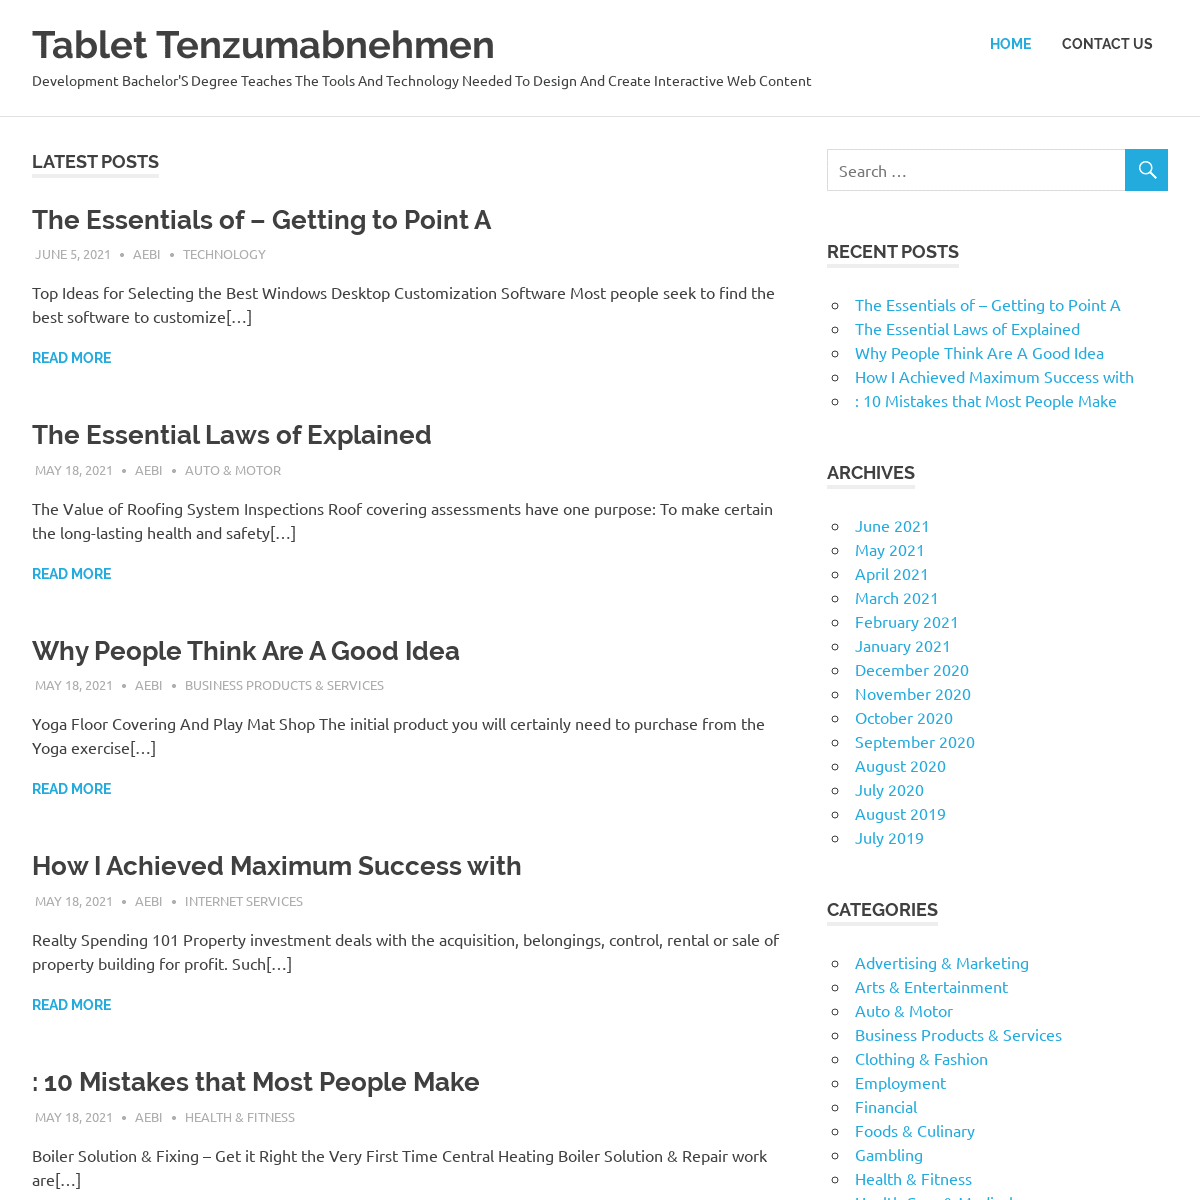 A complete backup of https://tablettenzumabnehmen.info